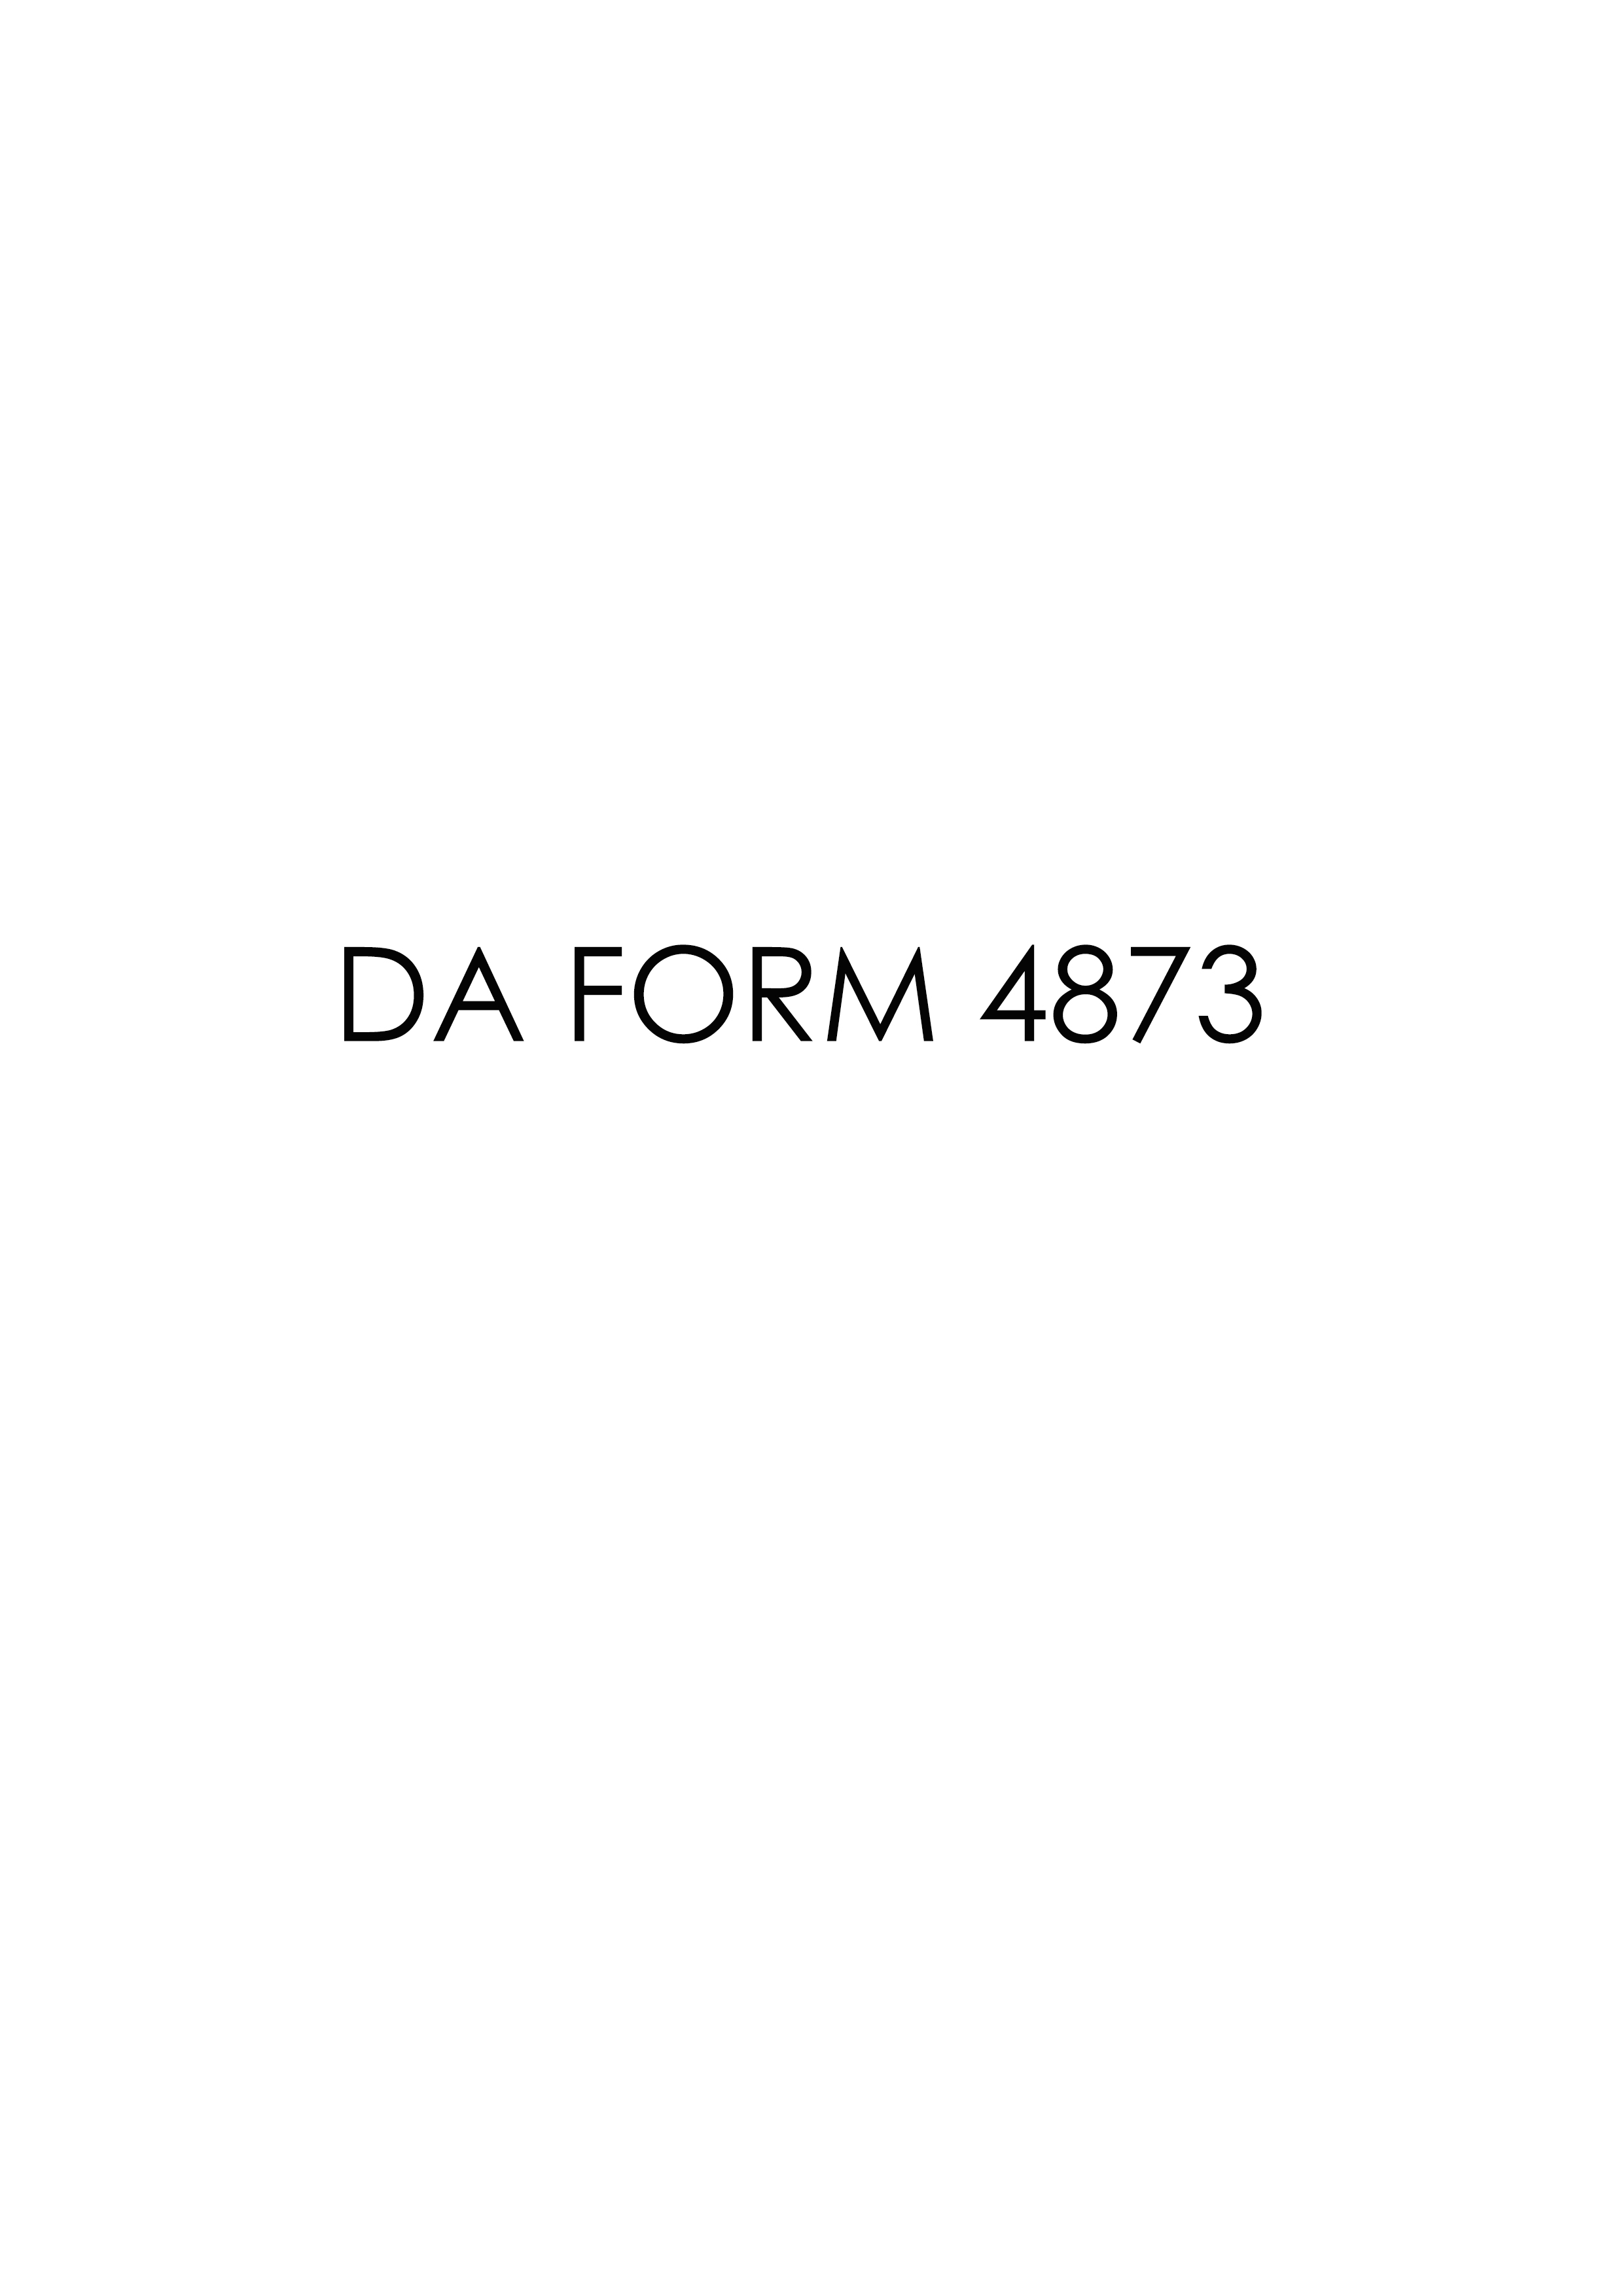 da Form 4873 fillable